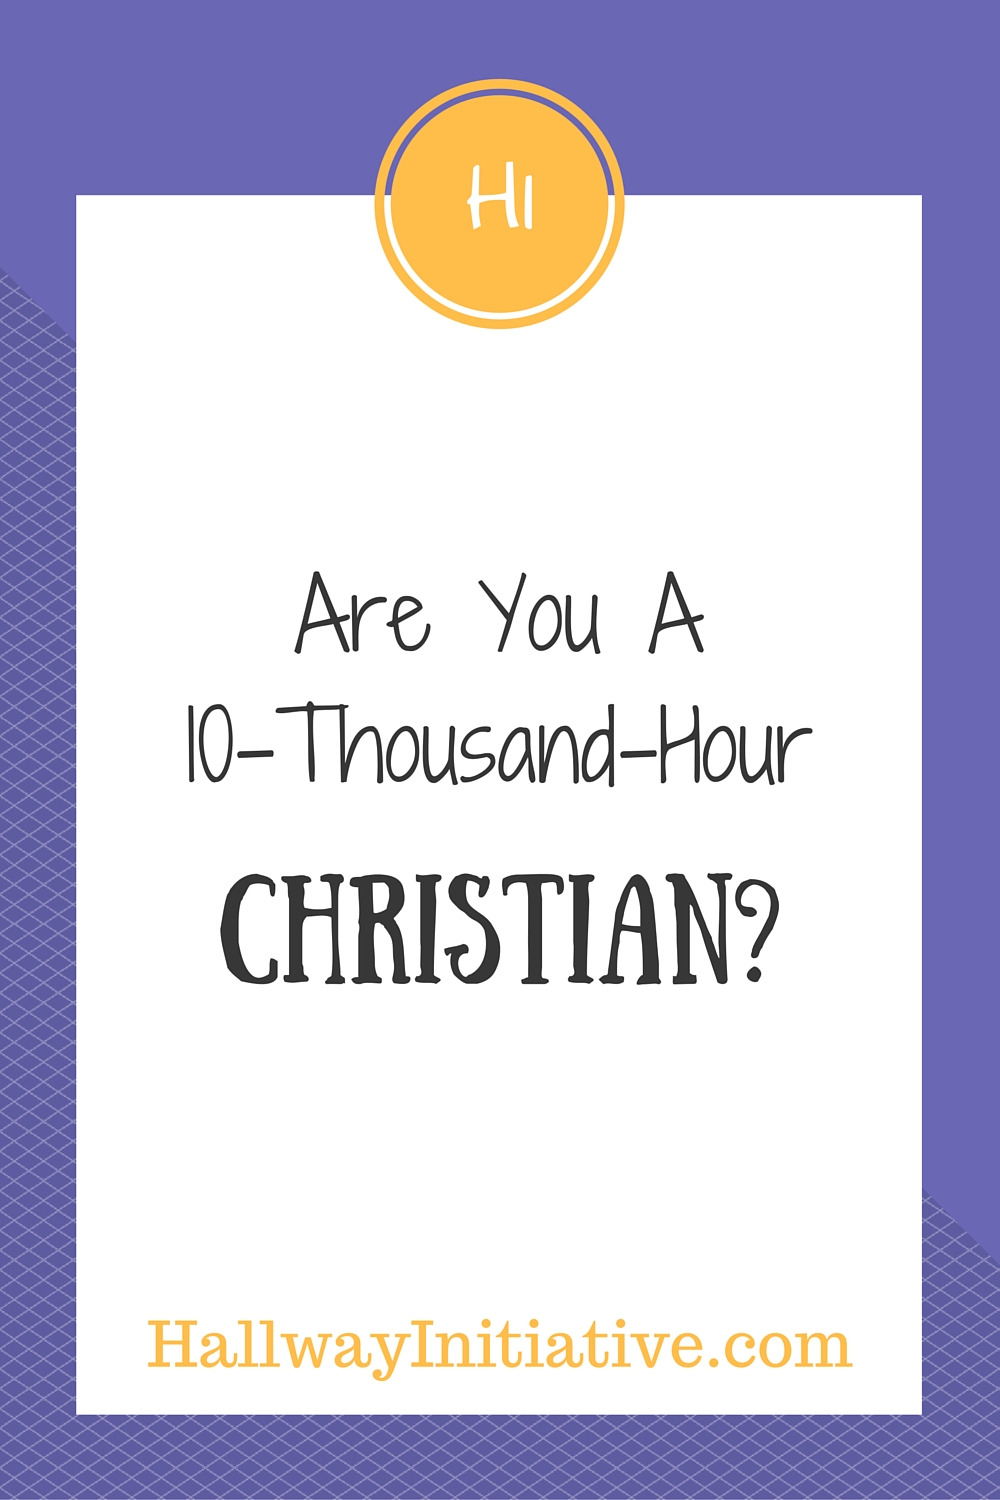 Are you a 10-thousand-hour Christian?